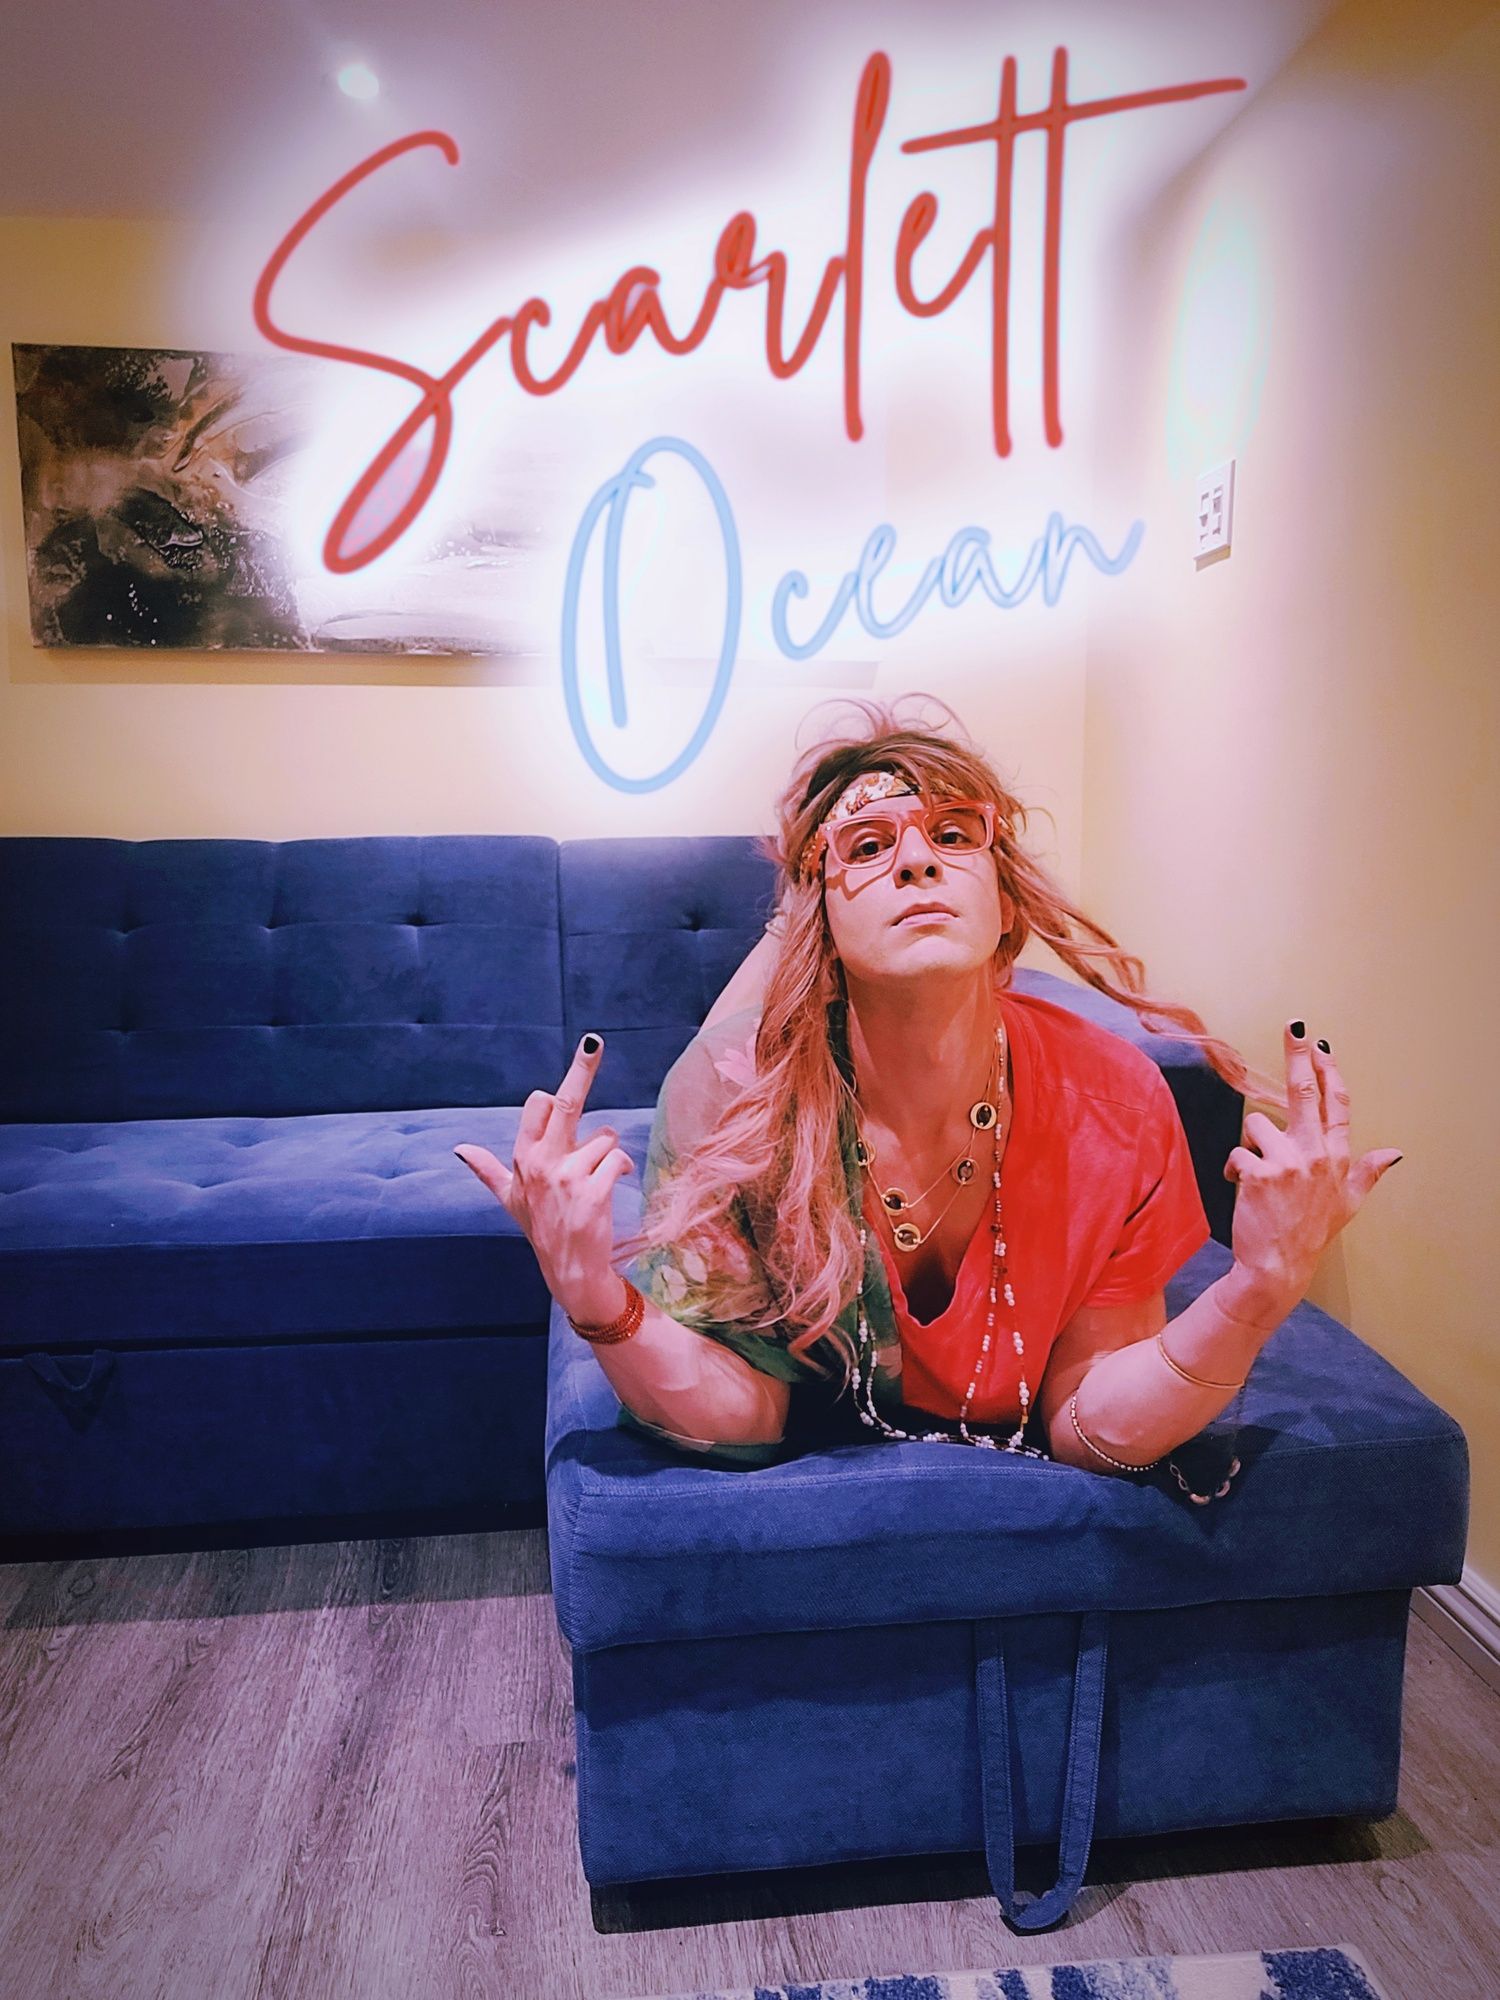 Scarlett Ocean - LIVE in COLOR #40